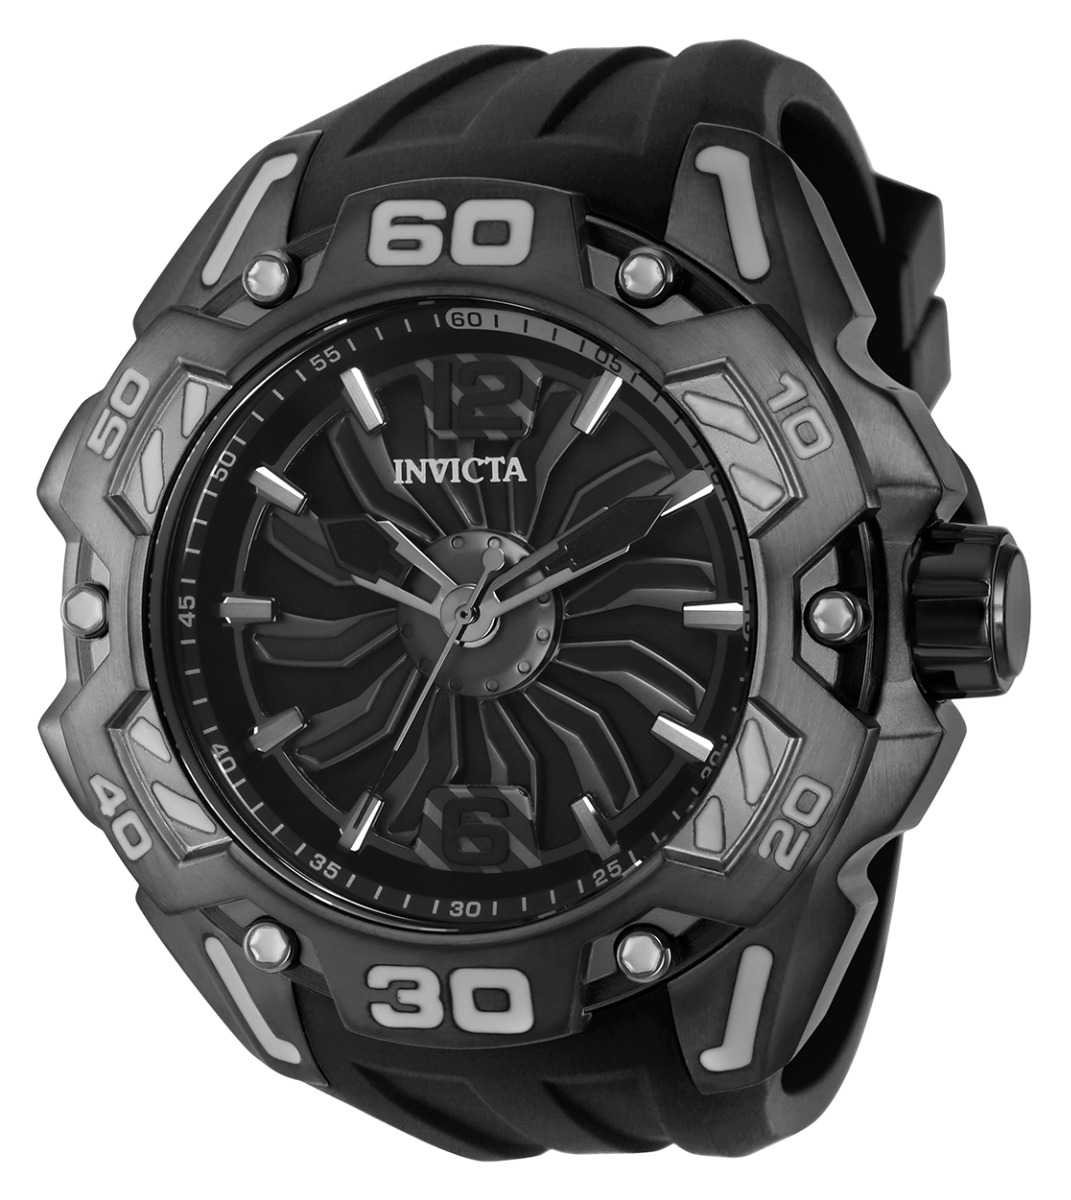 Invicta Aviator Automatic Men's Watch - 55mm, Black (36105)